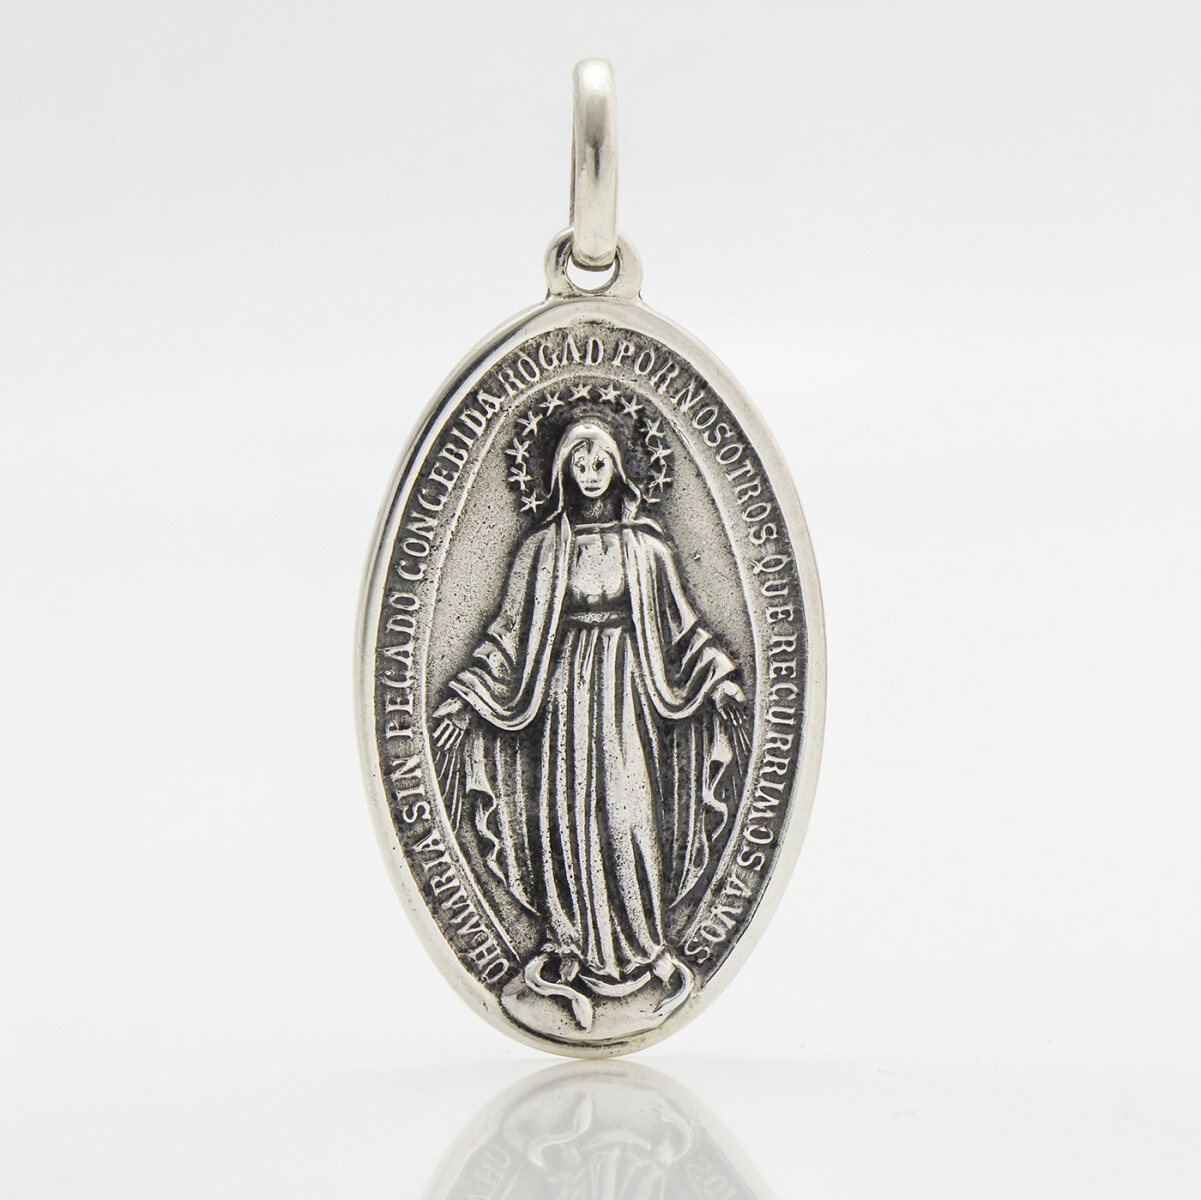 Medalla religiosa de la virgen milagrosa de plata 900, 4cm*2.5cm. 